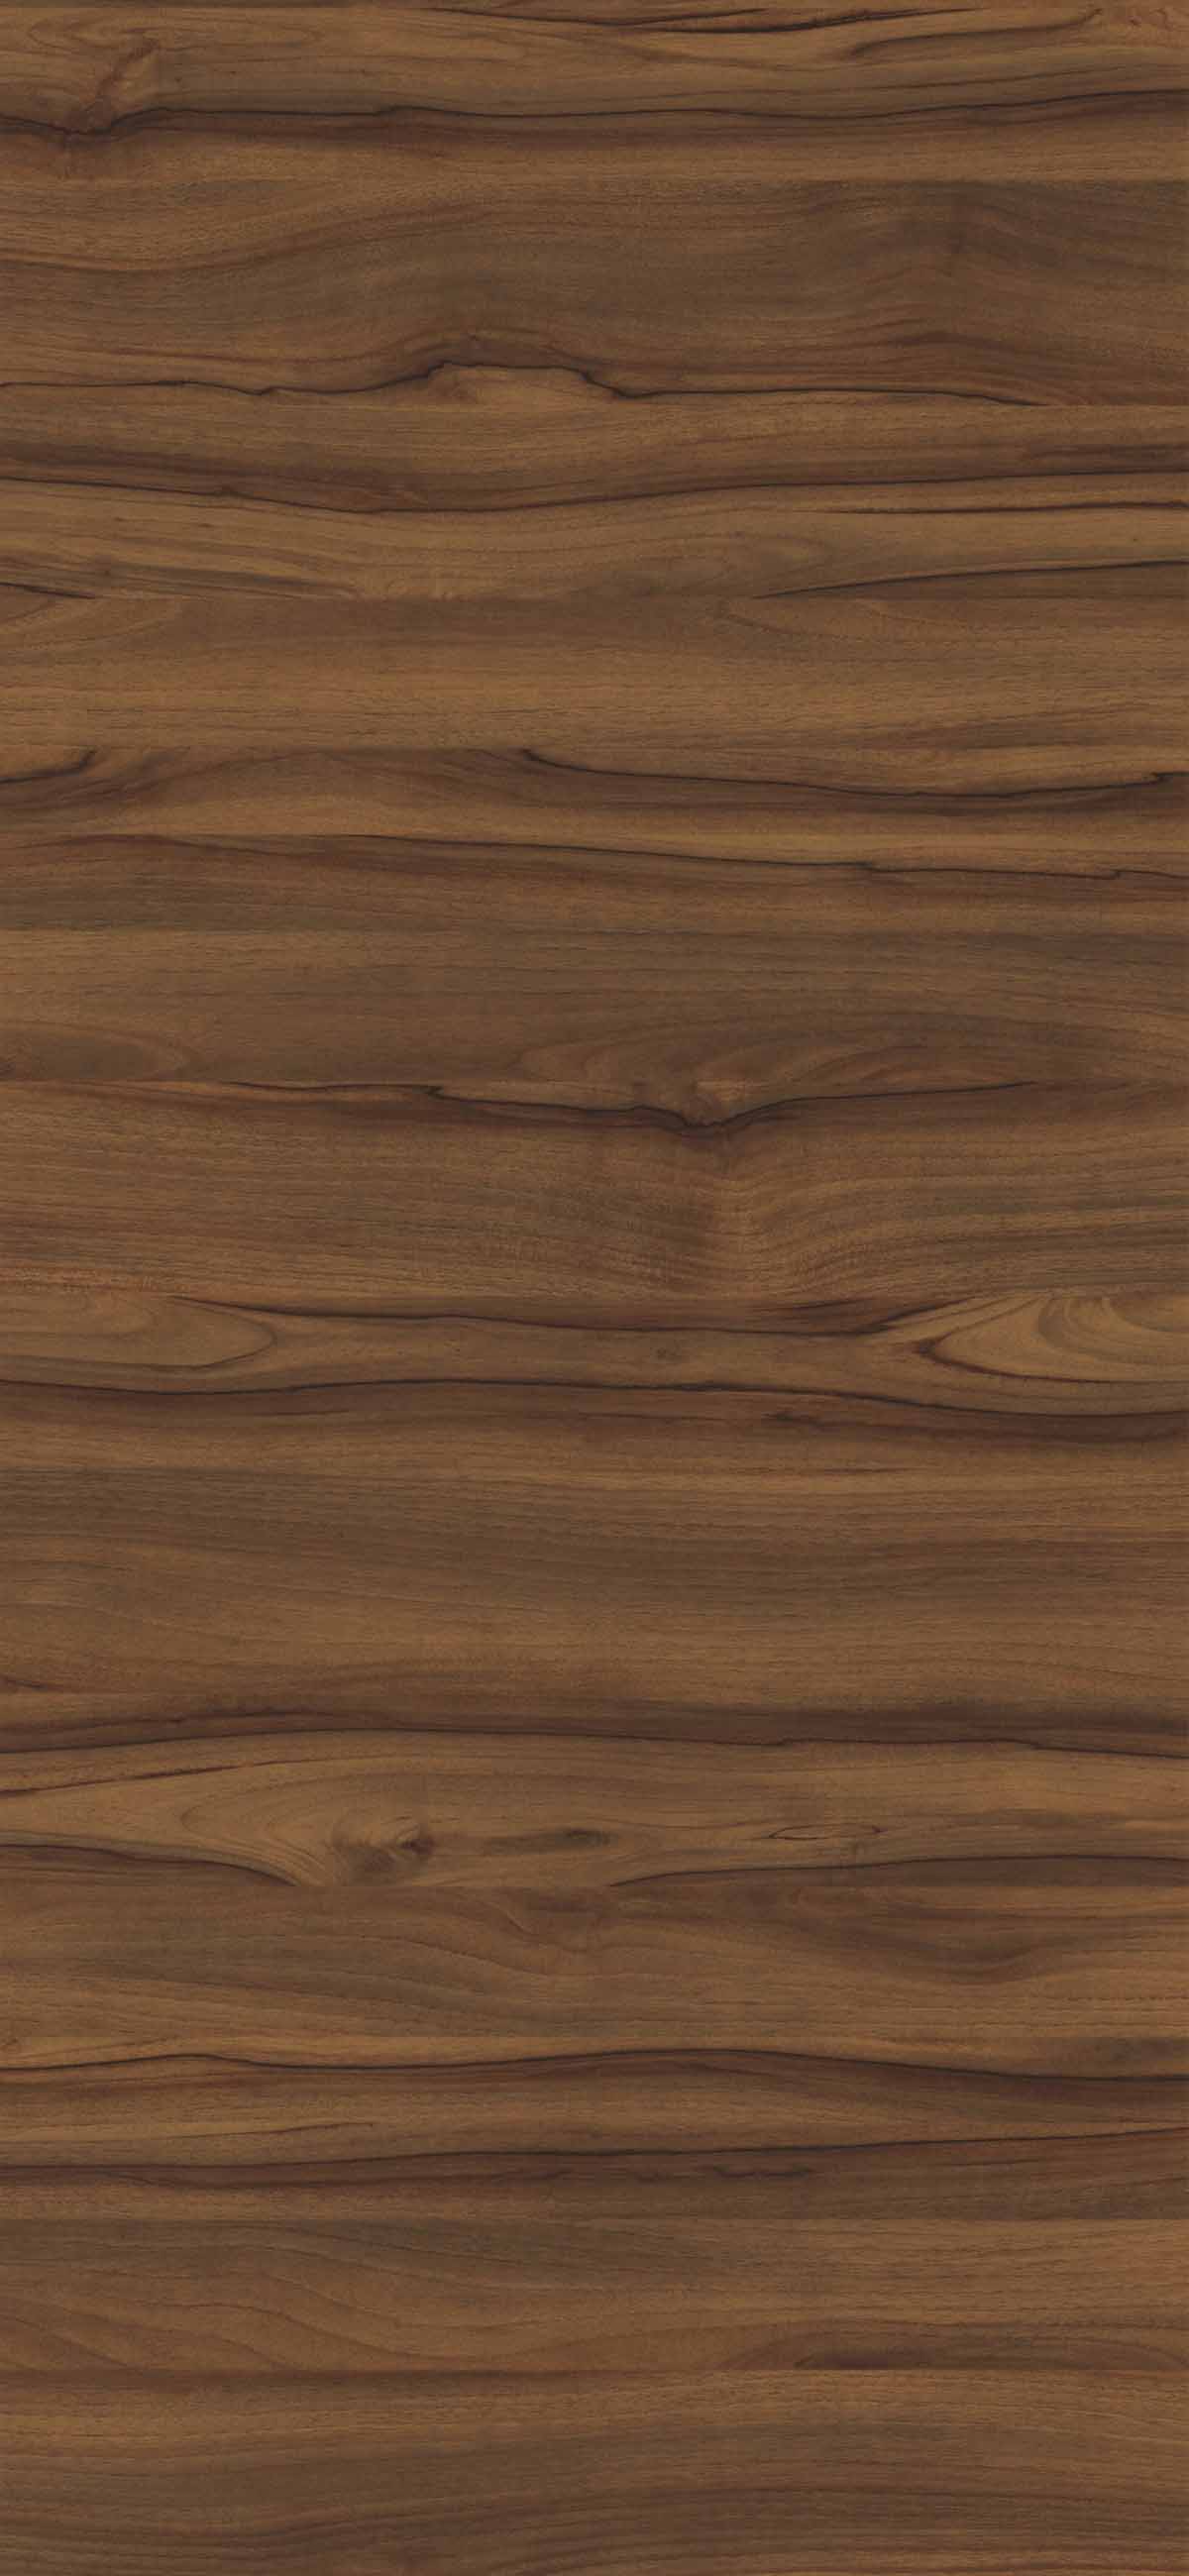 690	- Horizontal Natural Wood